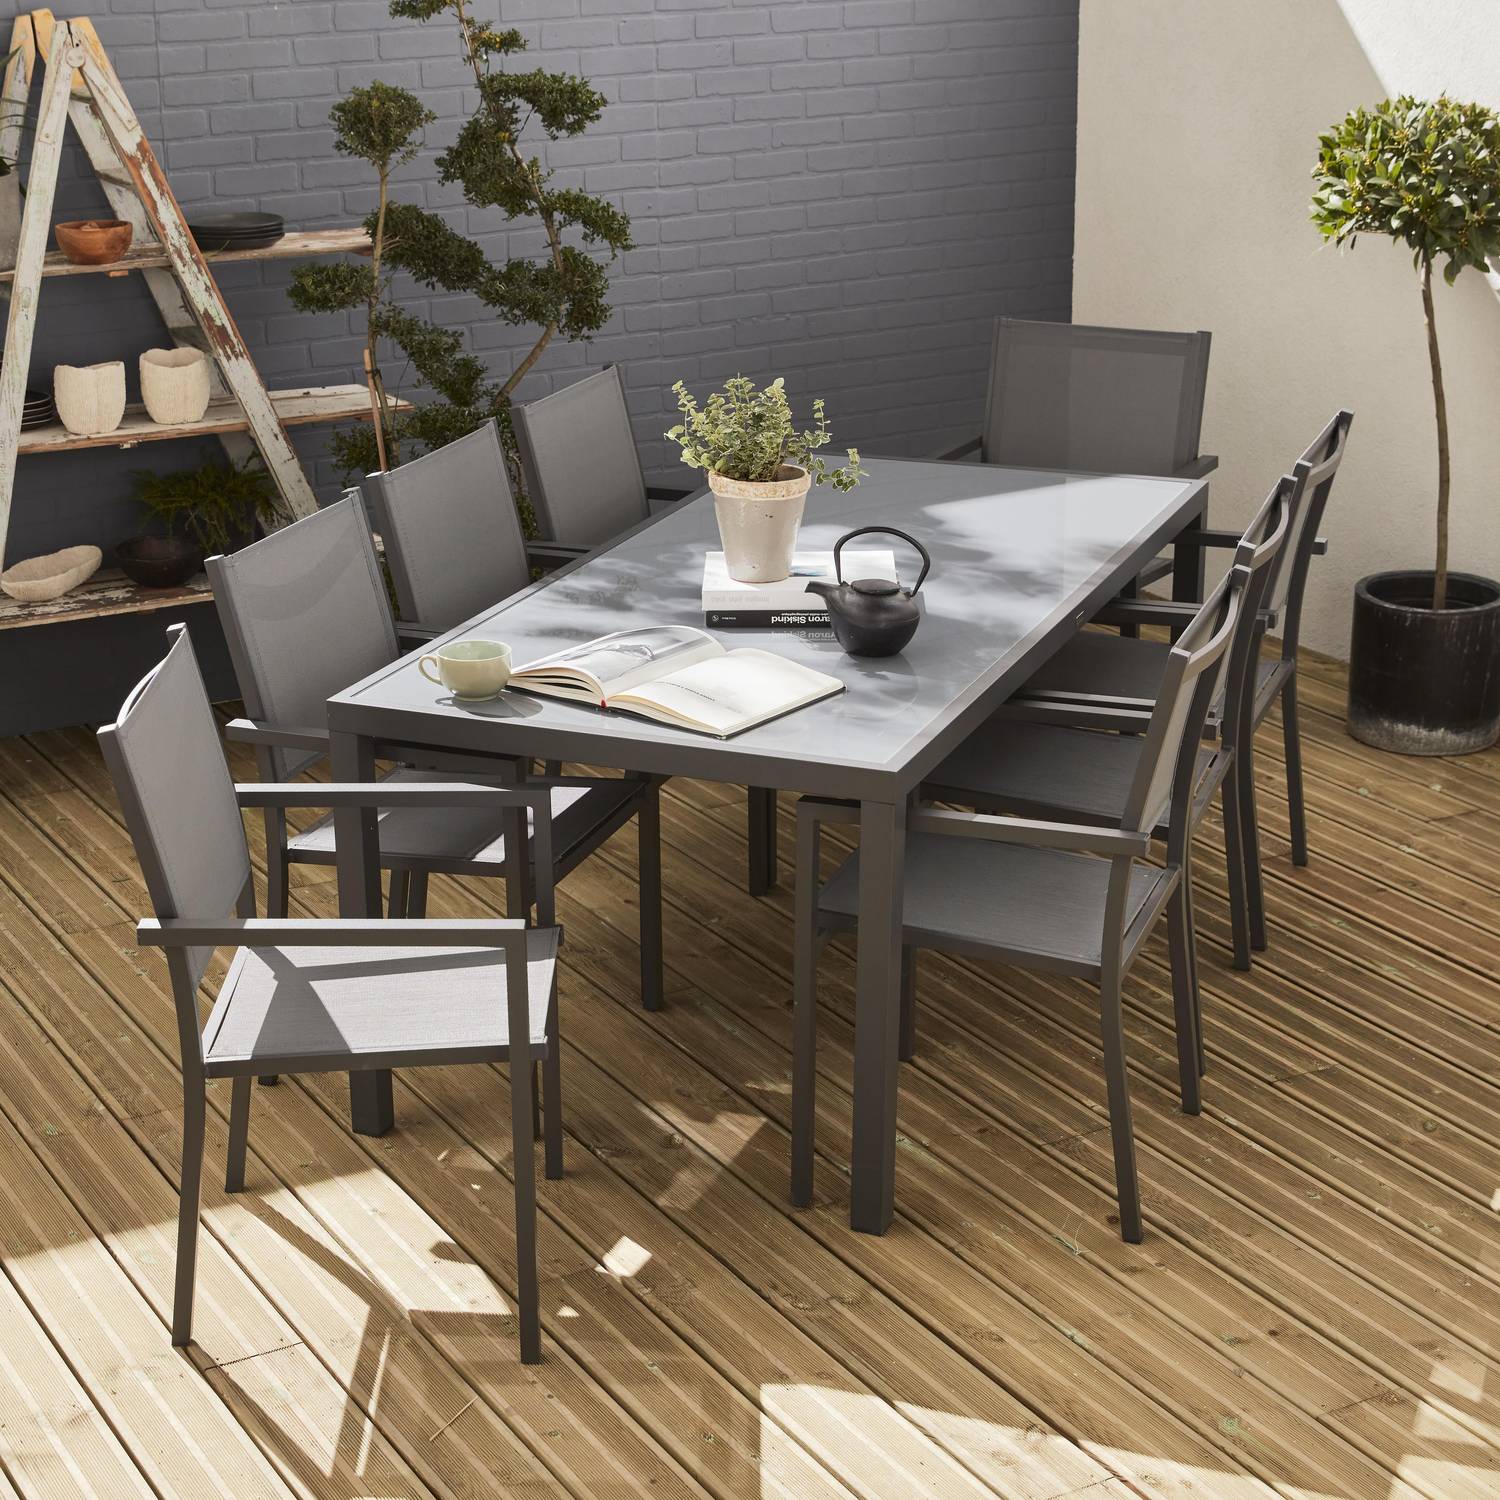 Gartengarnitur aus Aluminium und Textilene - Capua 180 cm - Anthrazit, grau - 8 Plätze - 1 großer rechteckiger Tisch, 8 stapelbare Sessel Photo1